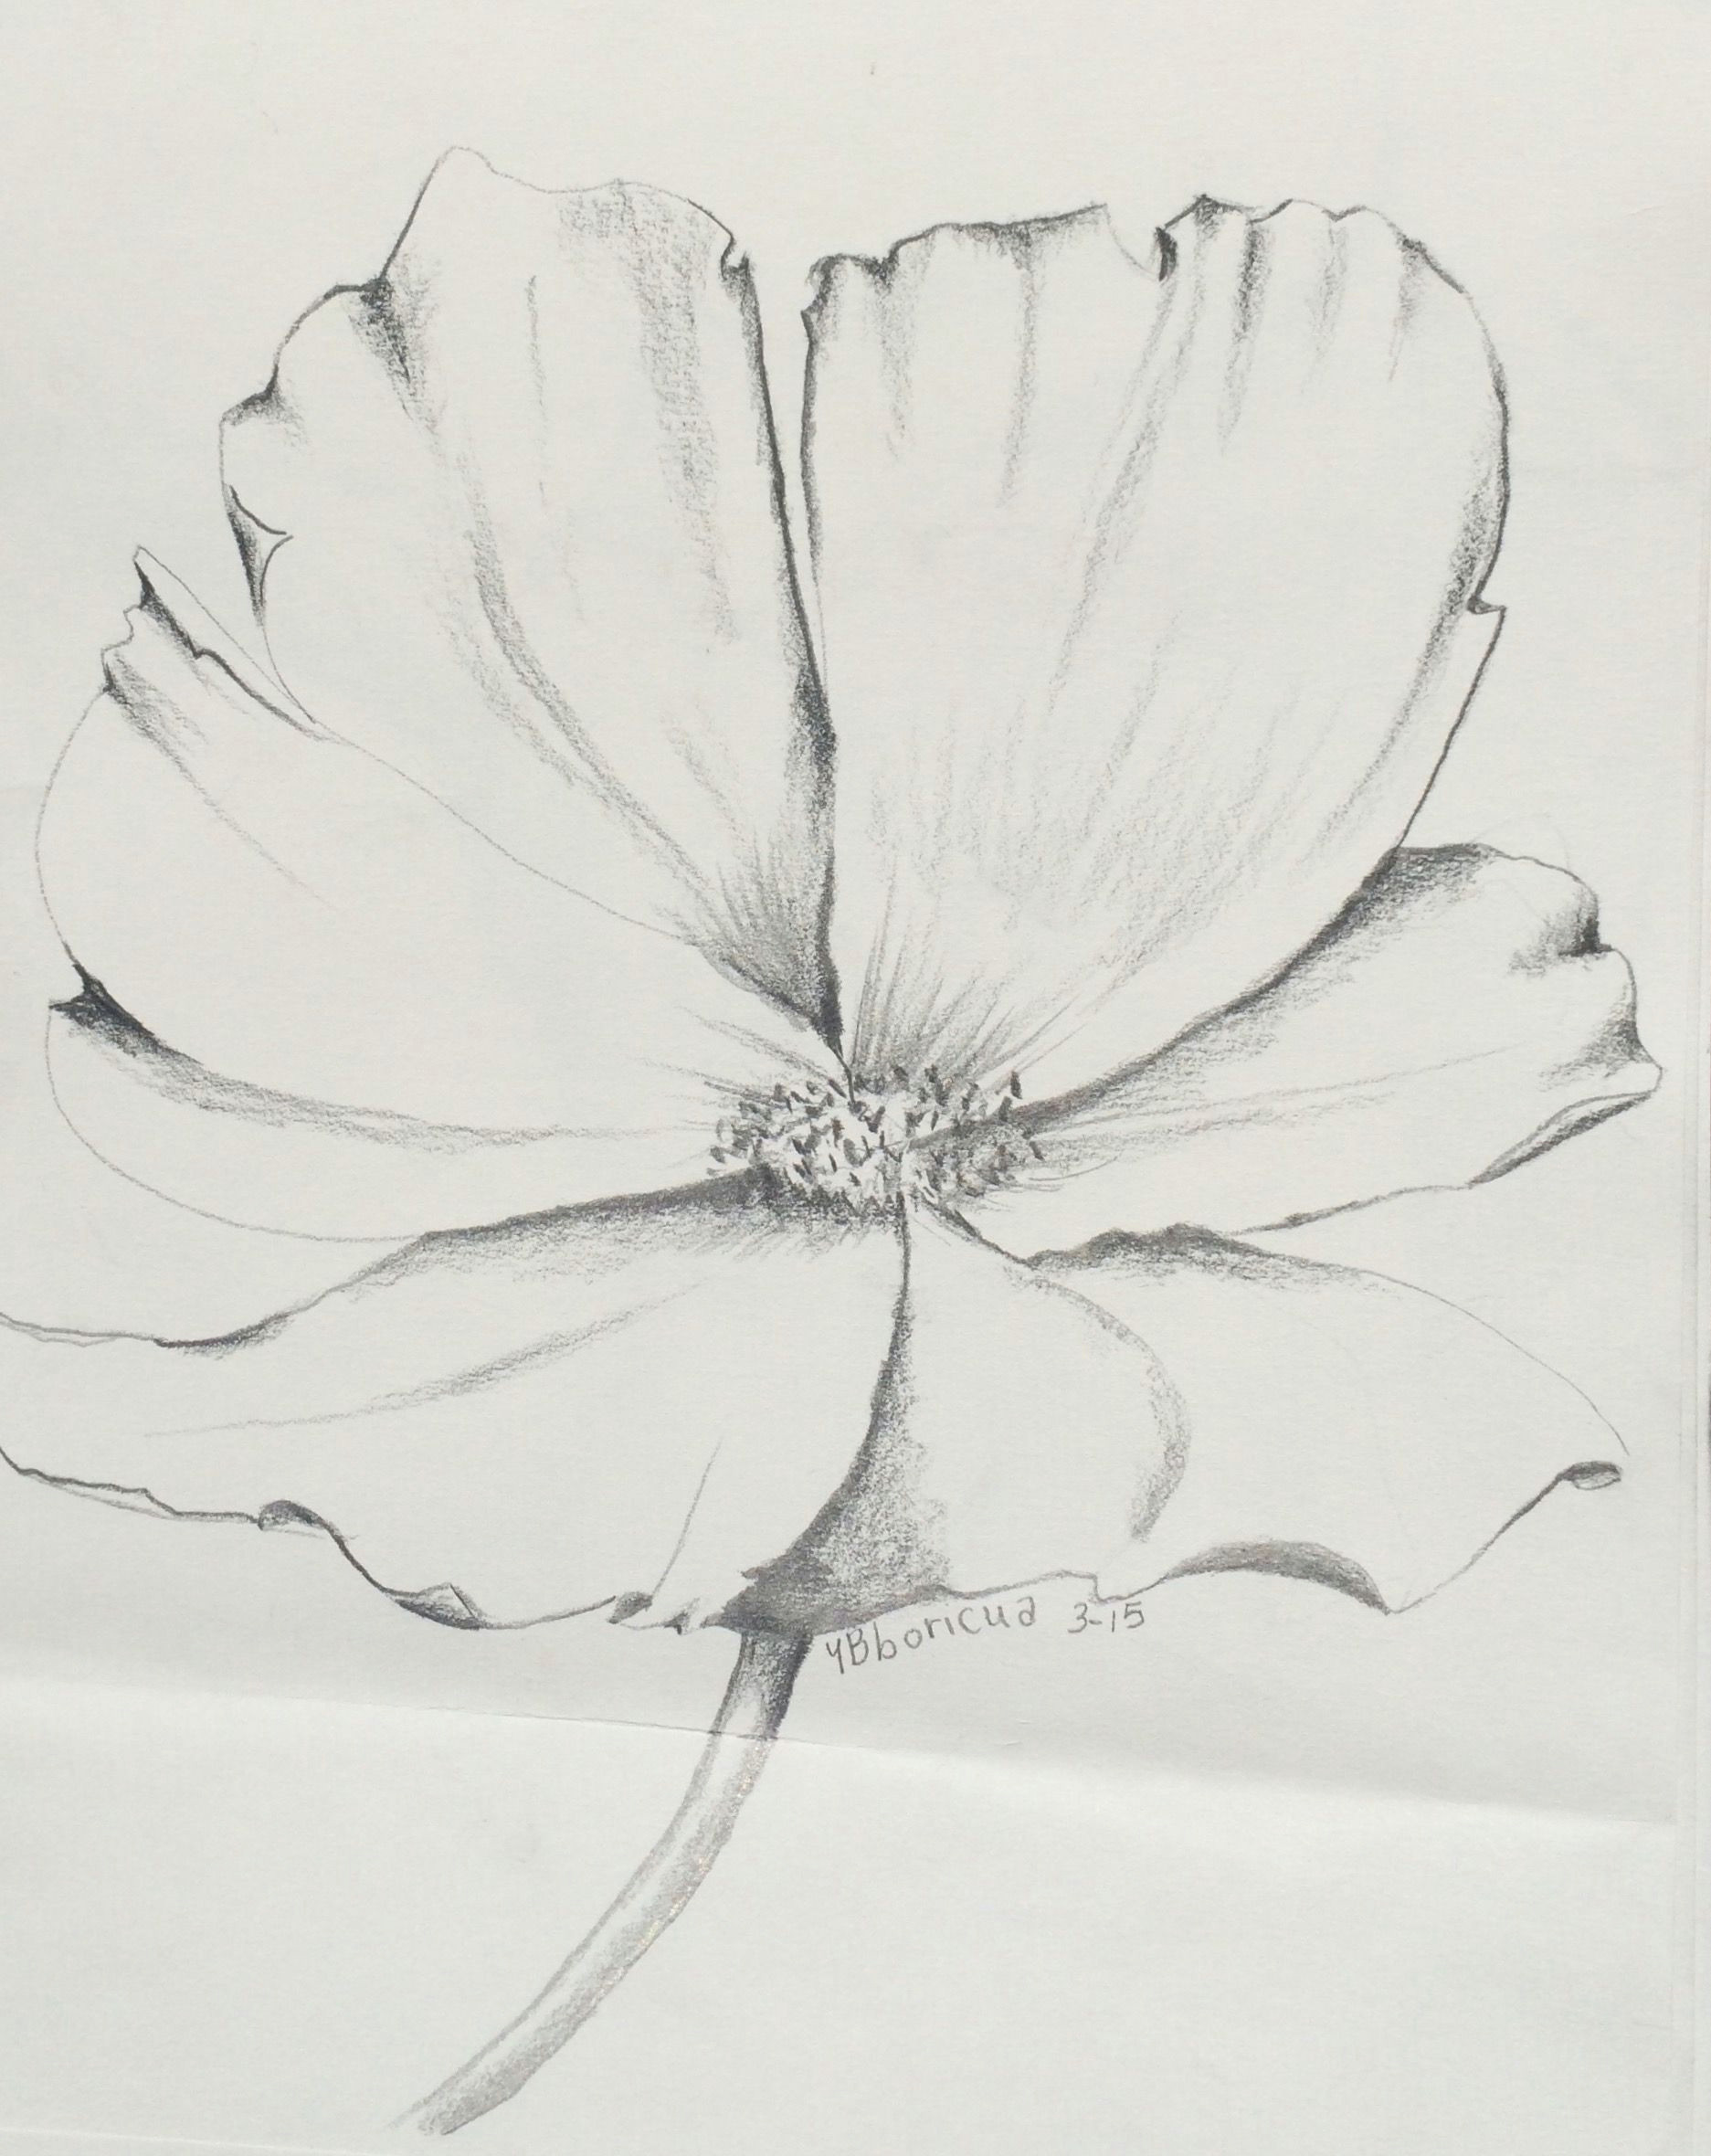 Drawings Of Flowers Abstract Flower 7 Artist Ybboricua Description original Pencil Drawing